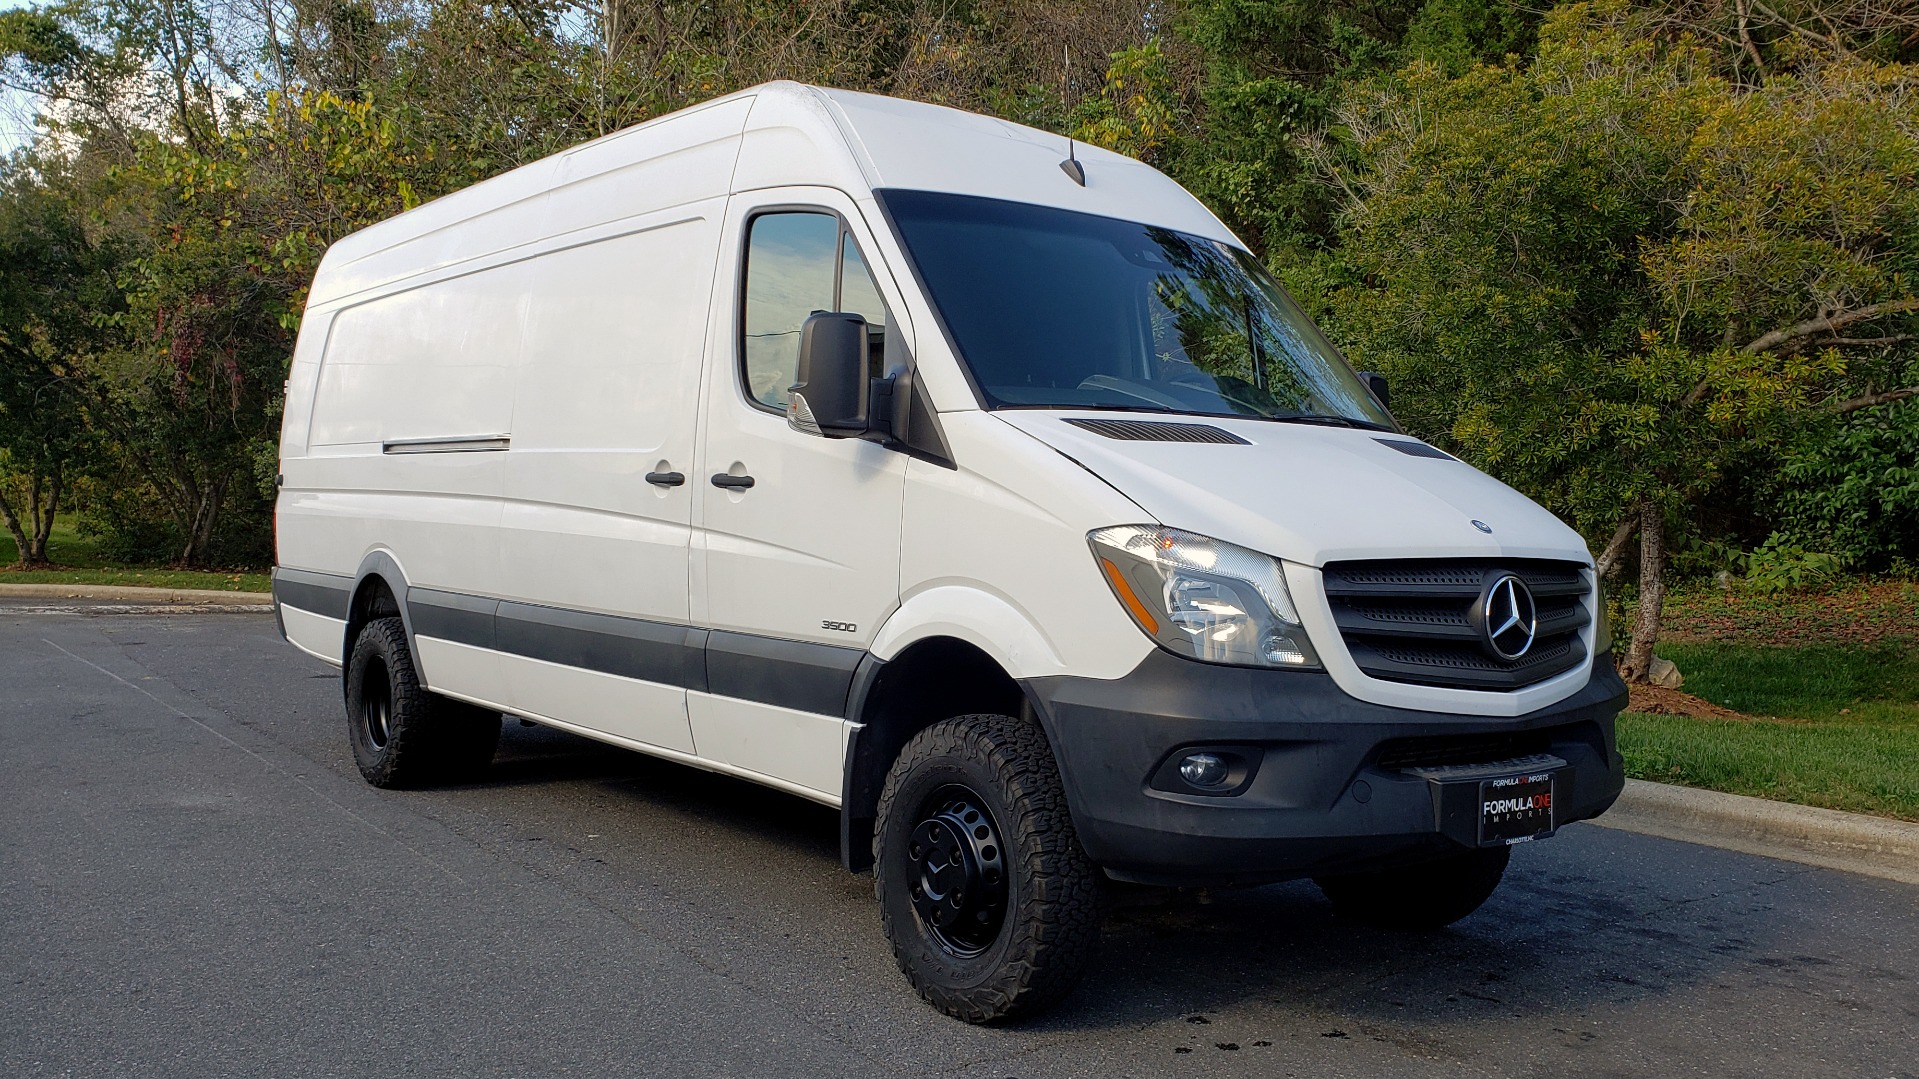 used sprinter 4x4 cargo van for sale